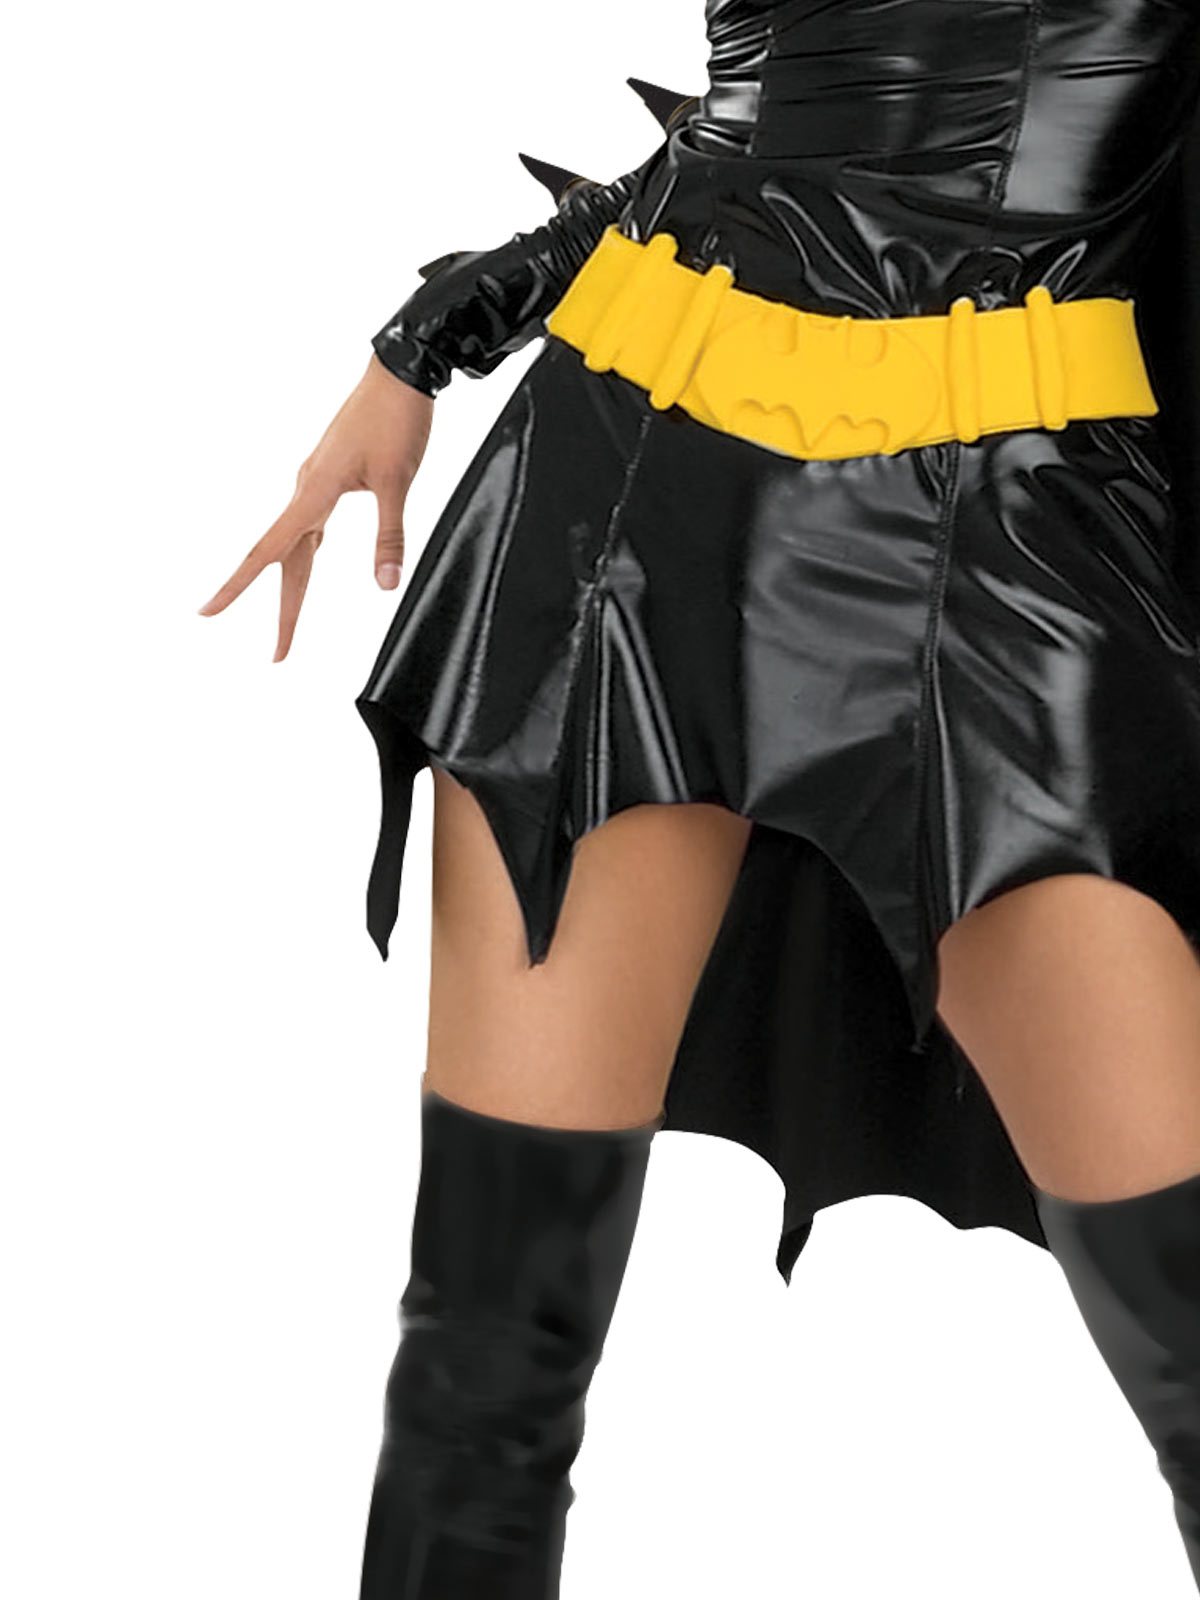 Costume Adult Batgirl DC Comics Small